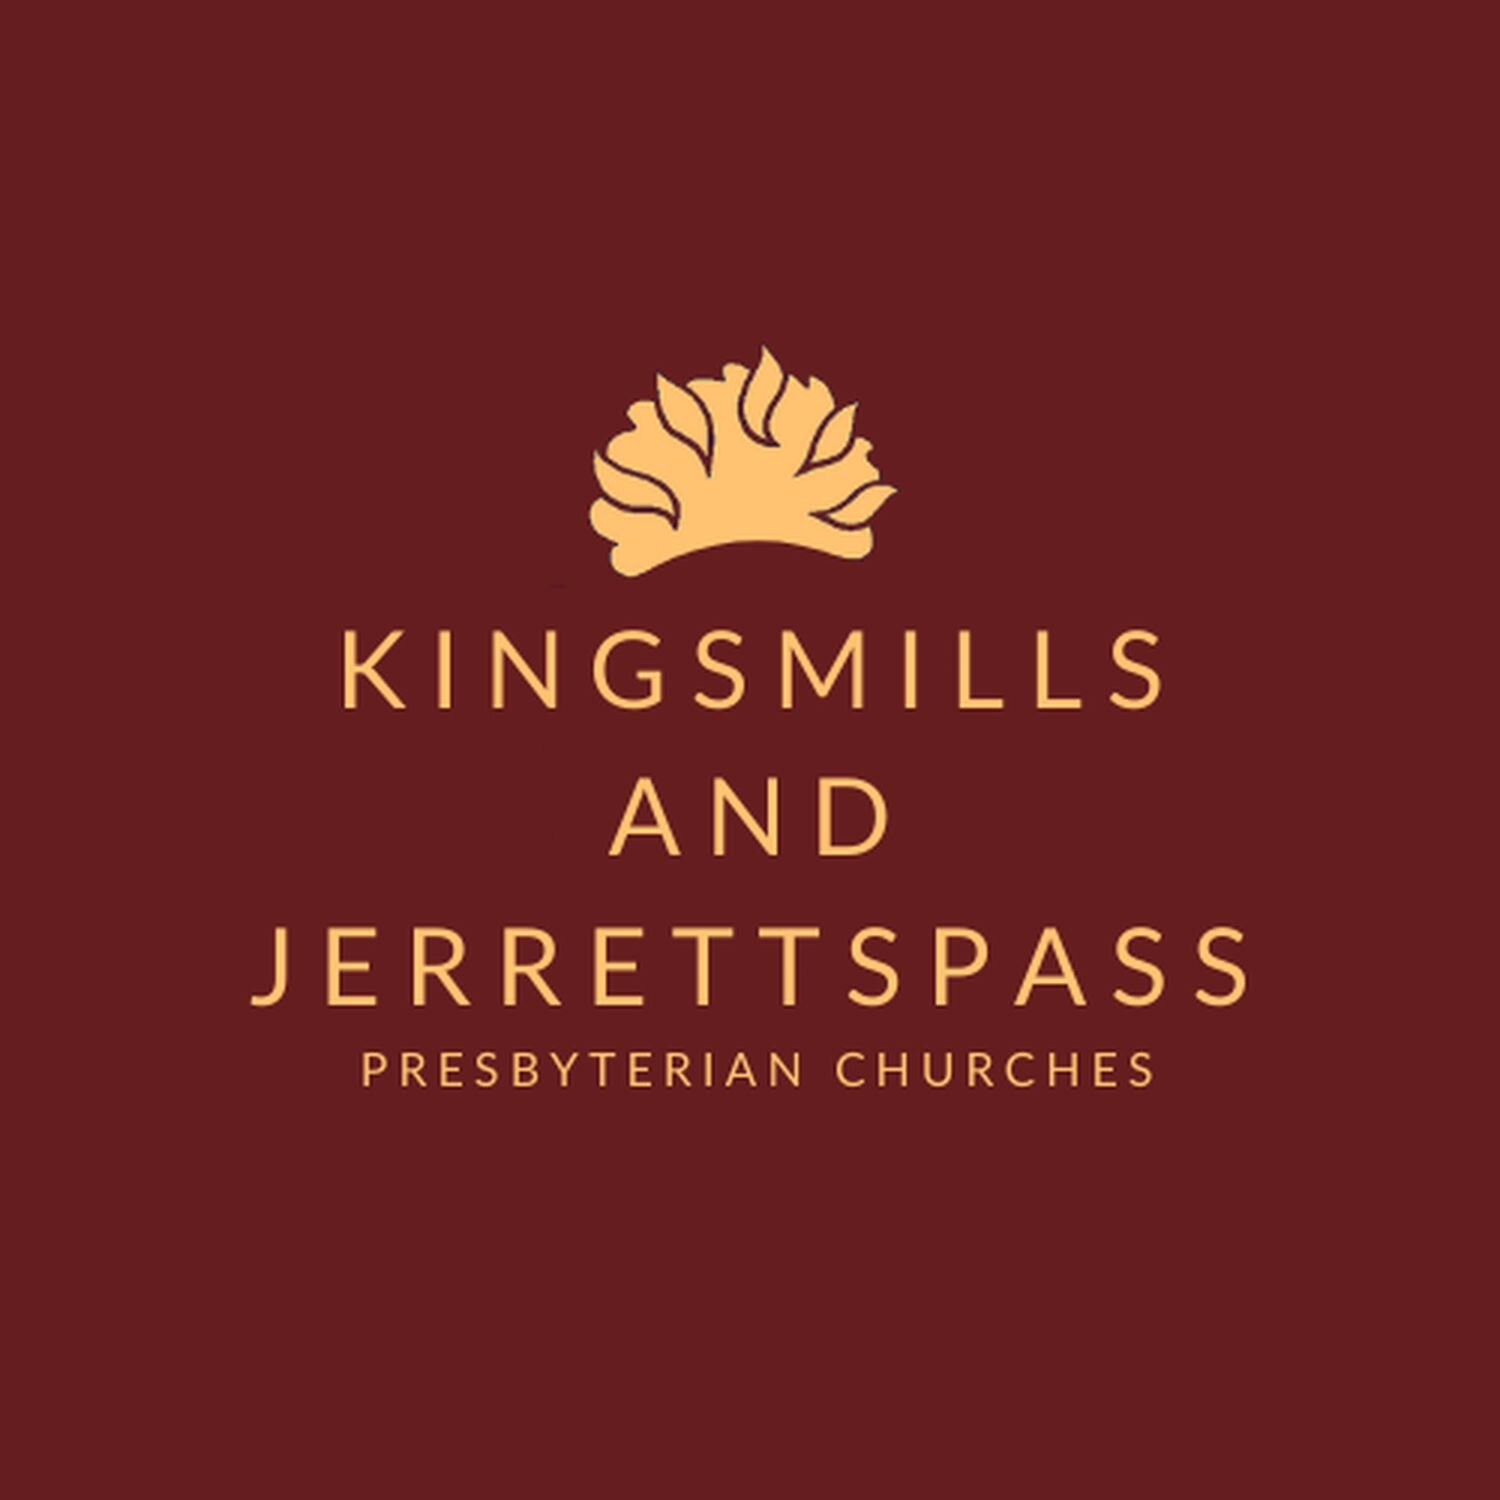 Kingsmills and Jerrettspass Presbyterian Churches